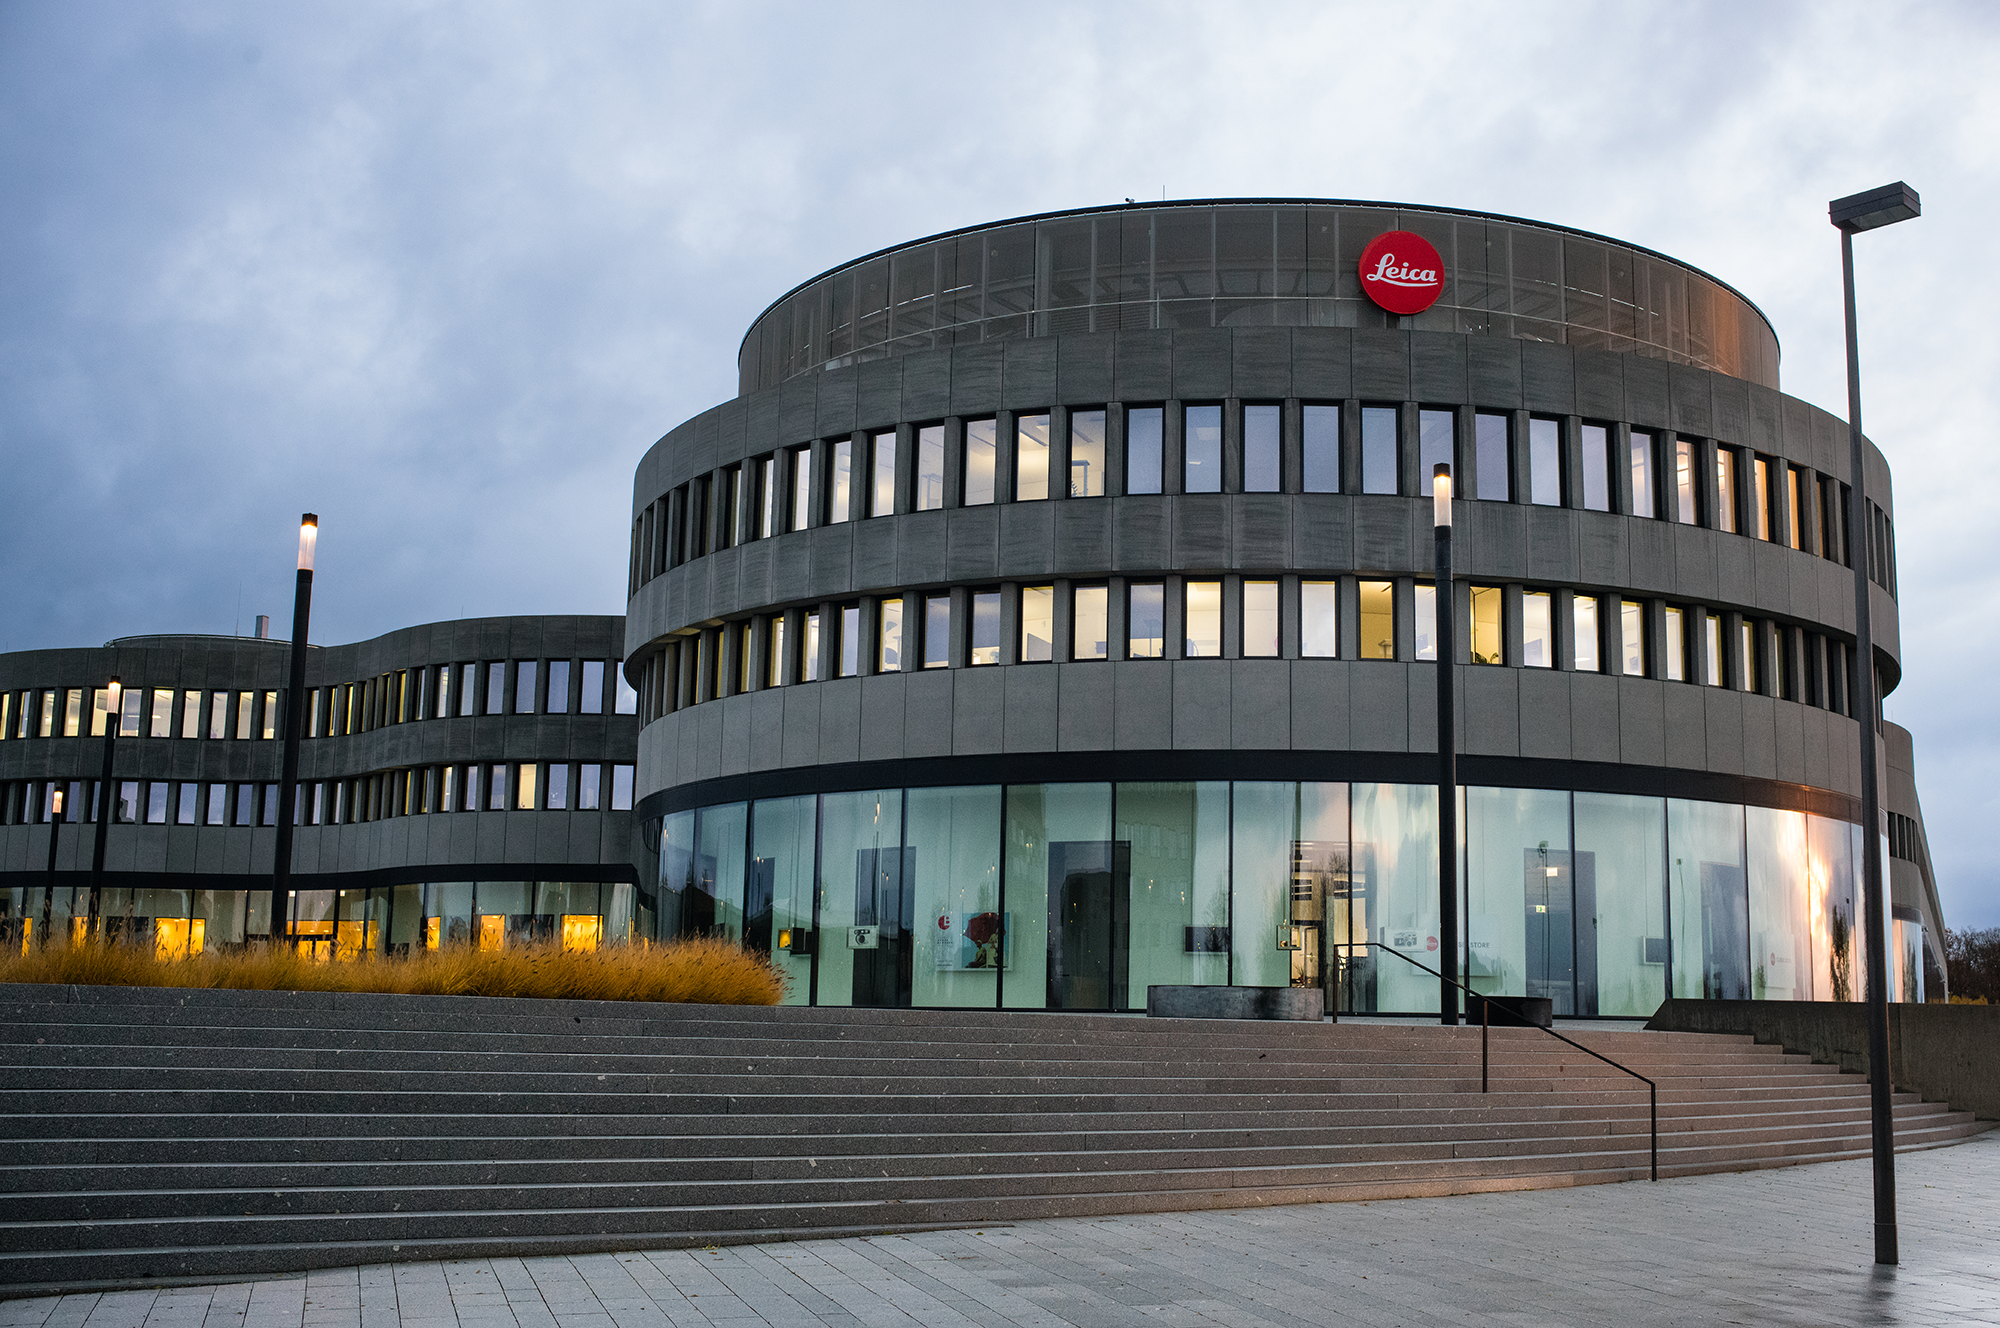 Welcome to Leica – Touring Leica's Headquarters